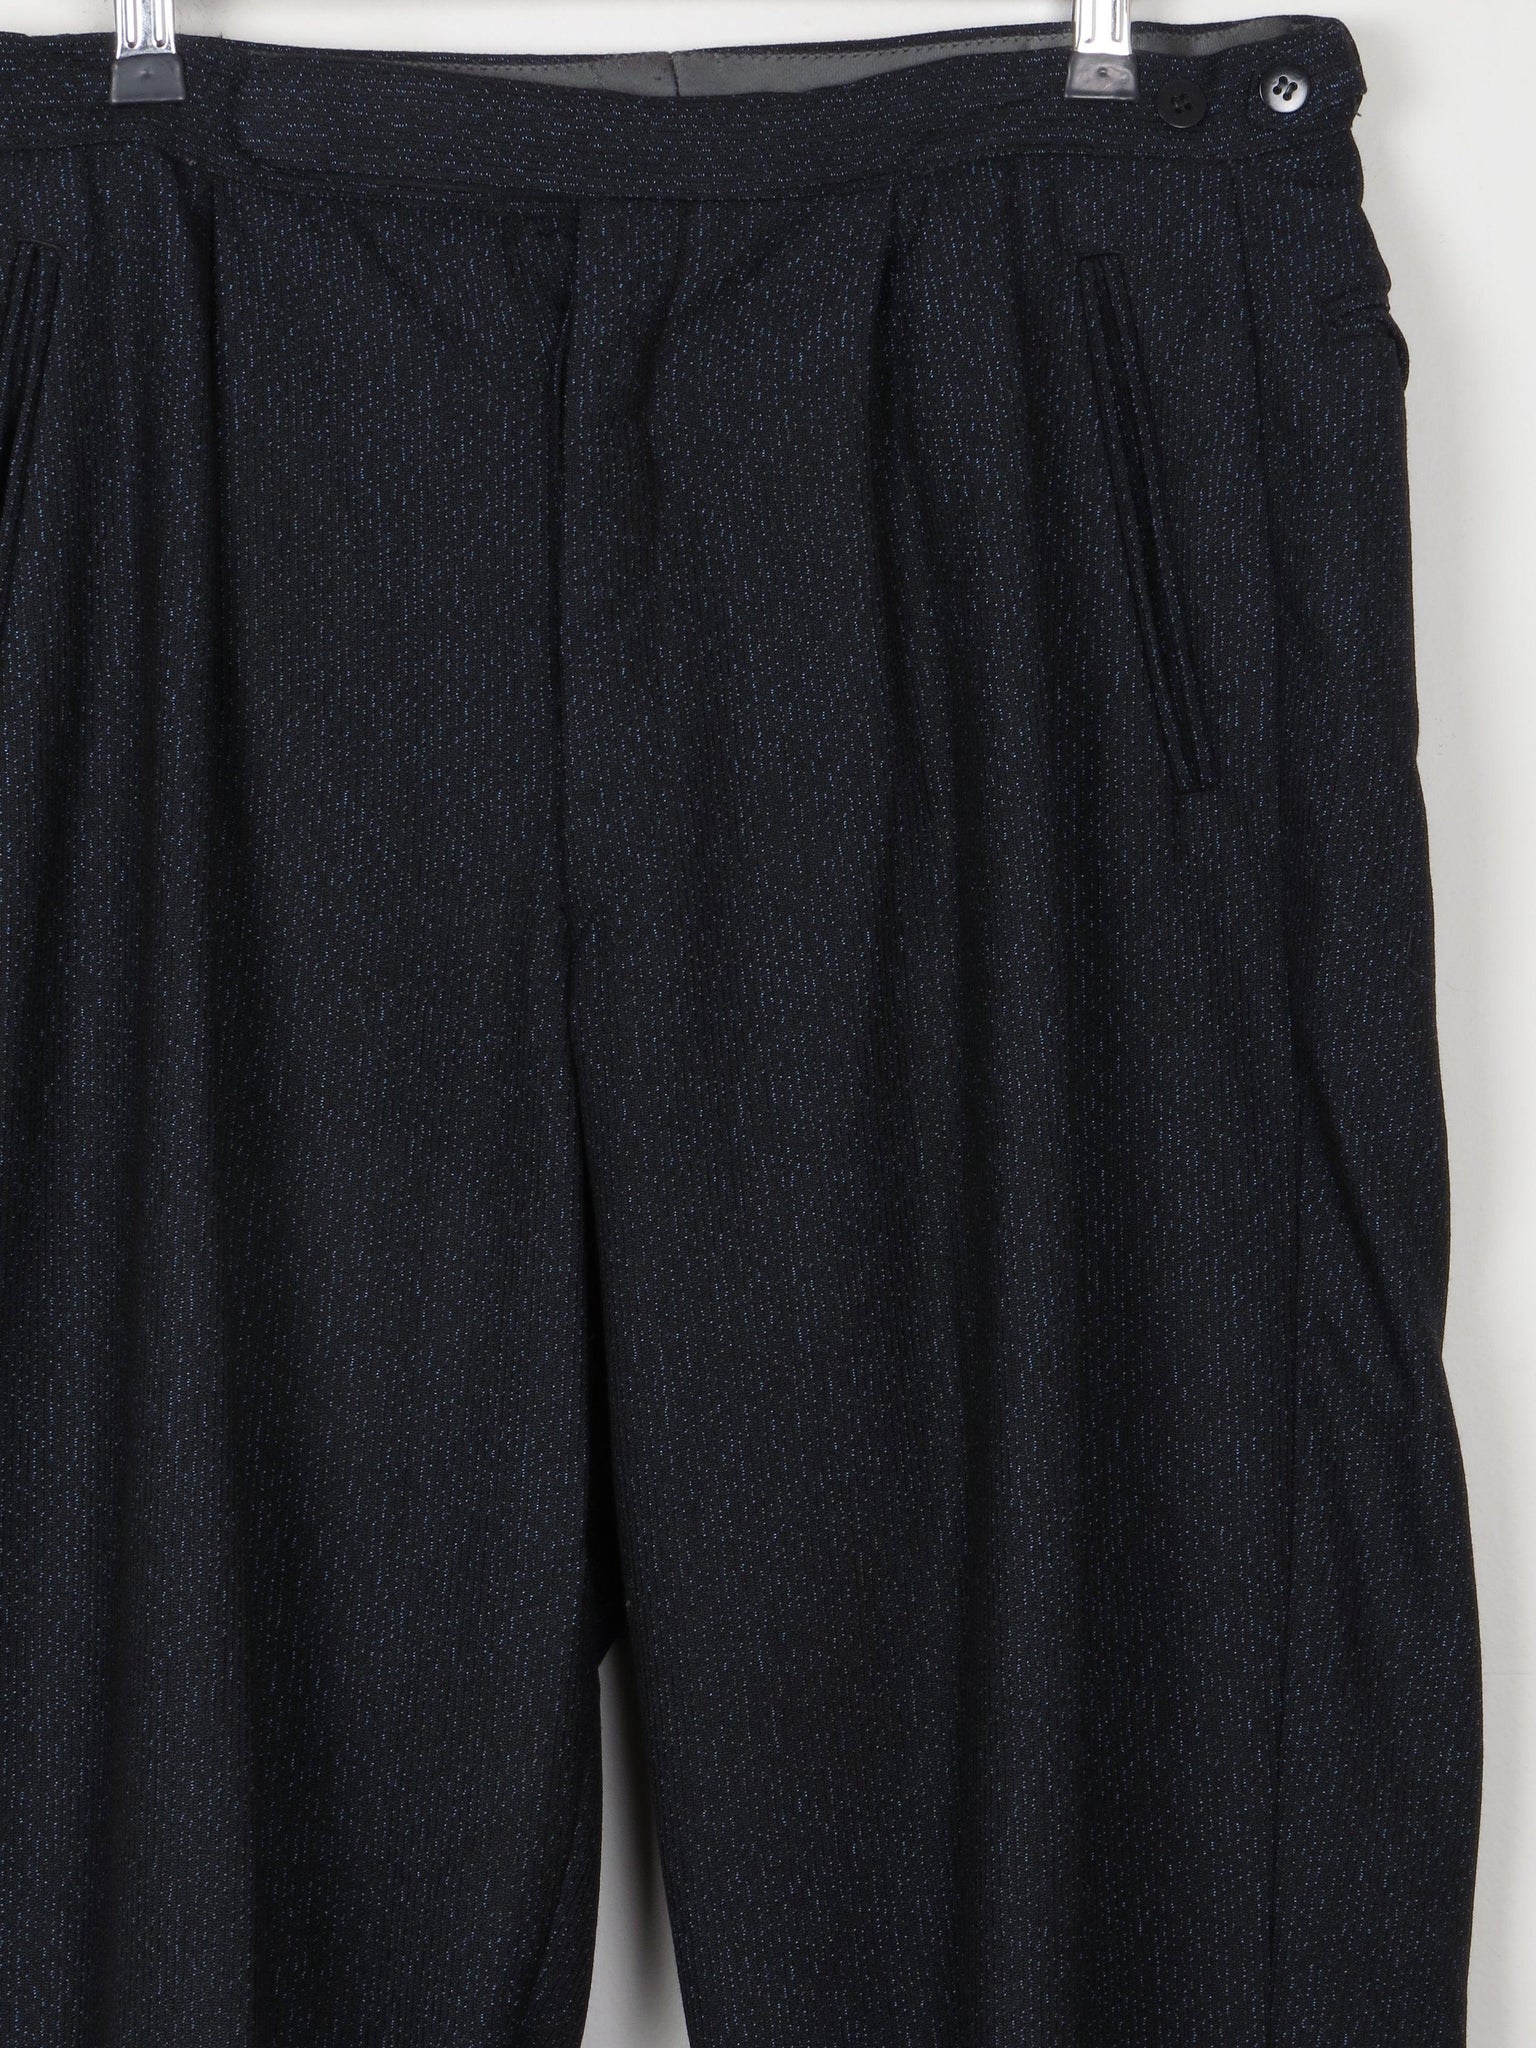 Men's Black & Blue 1950s Wool Trousers 32-34" 29L - The Harlequin